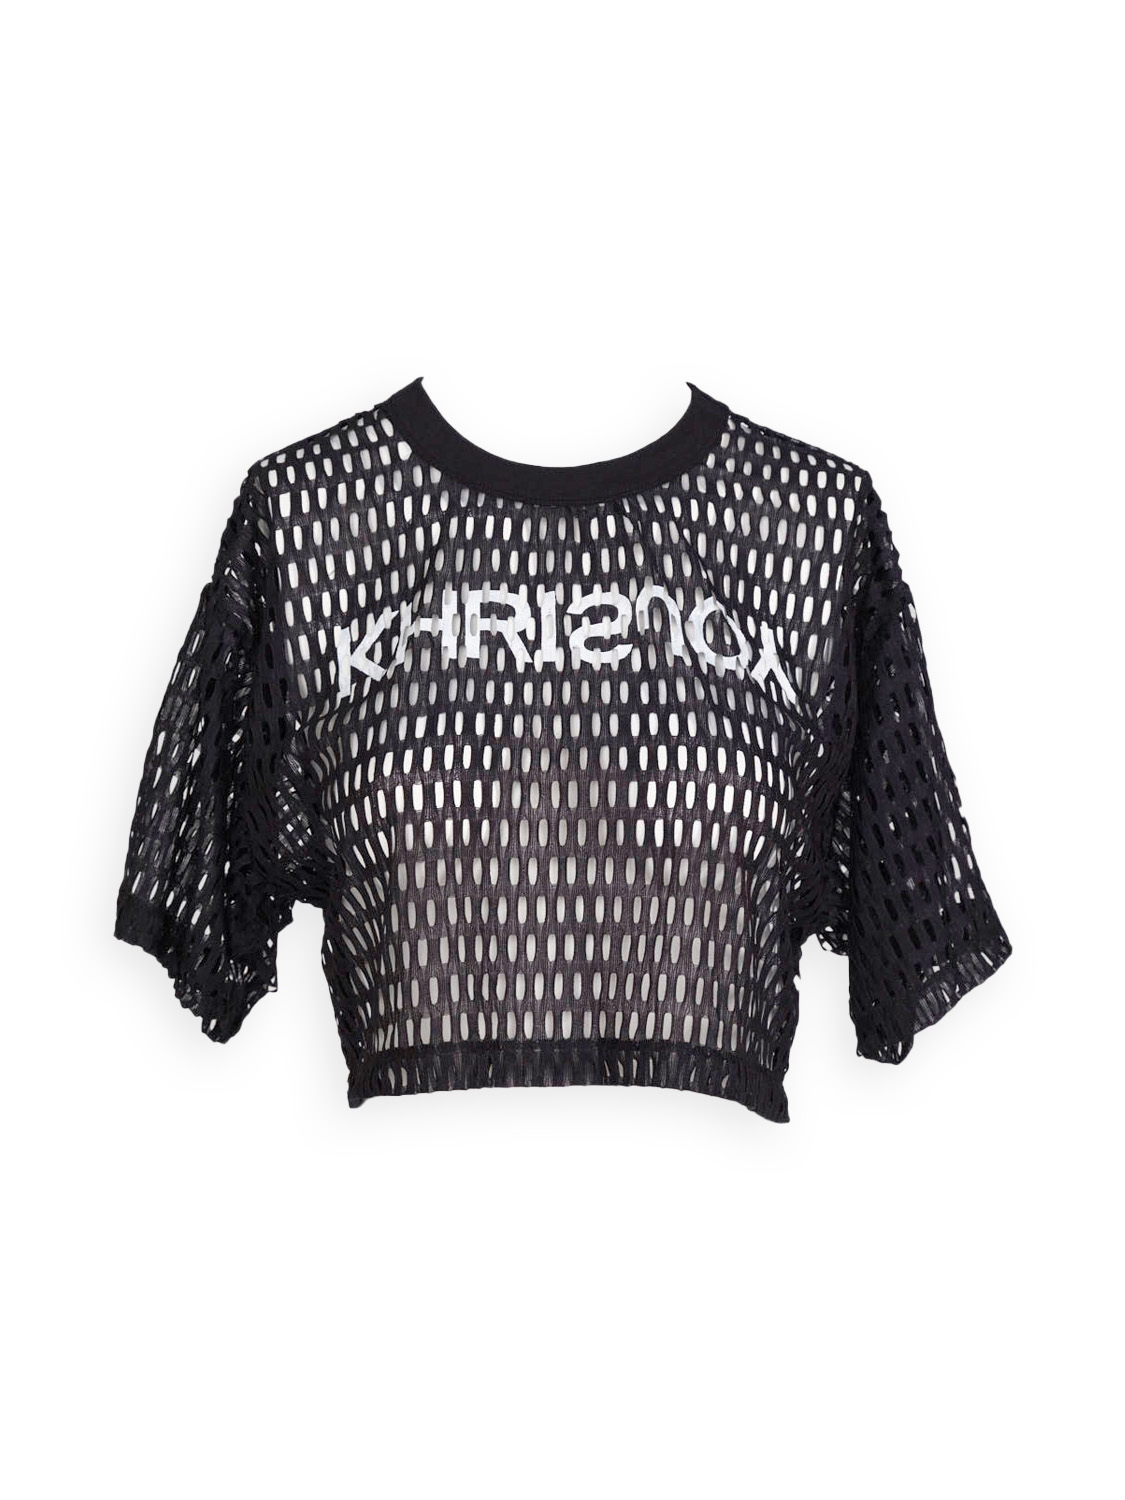 Khrisjoy Boxy T-Shirt mit Loch-Design black XS/S